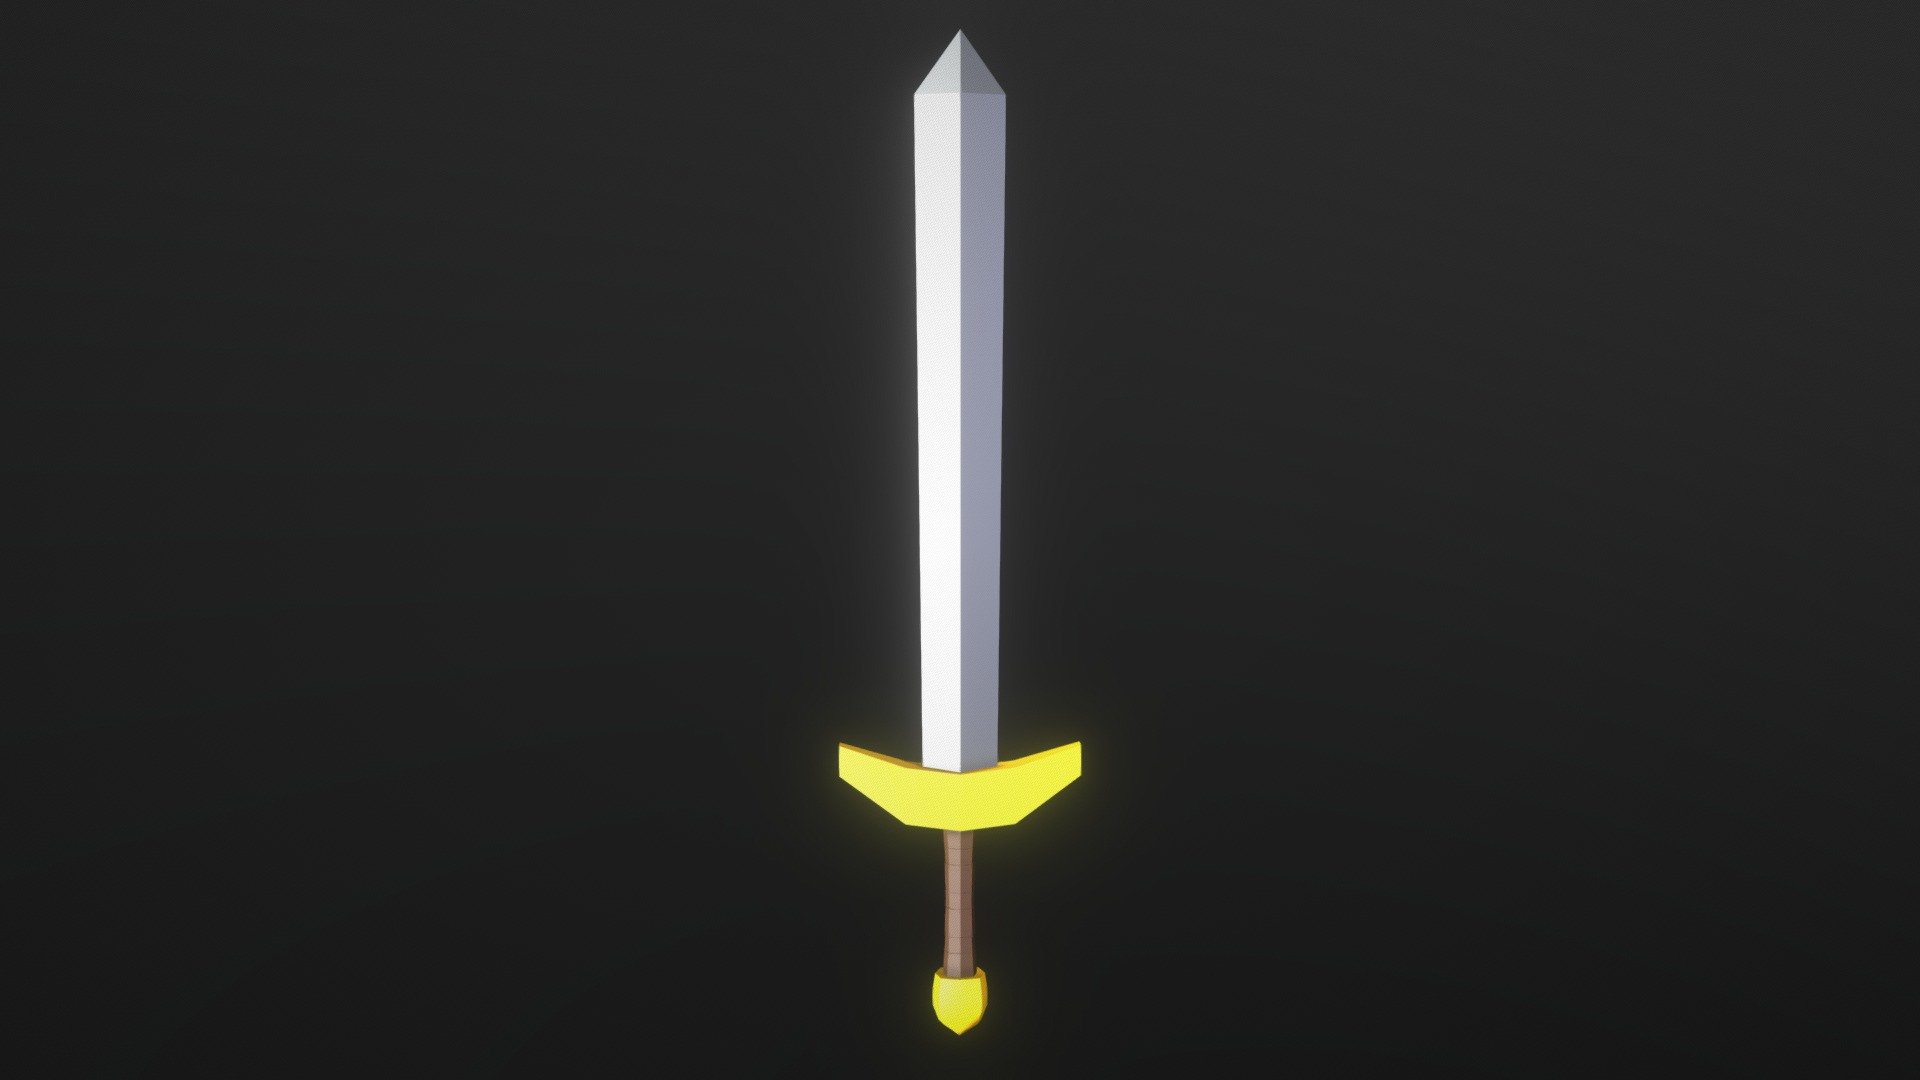 is my first sword - Low Poly Sword - Download Free 3D model by Fermin Morales (@Talos) 3d model